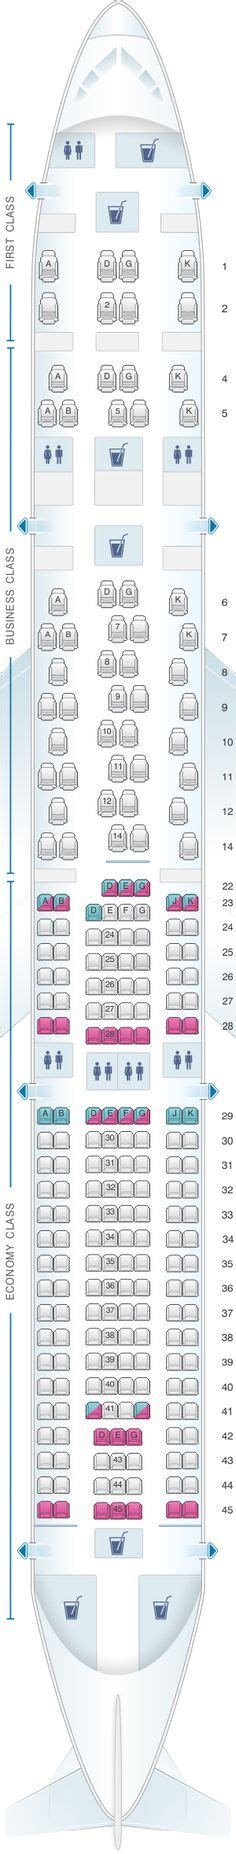 Seat Map Lufthansa Airbus A340 600 281pax Lufthansa Pinterest